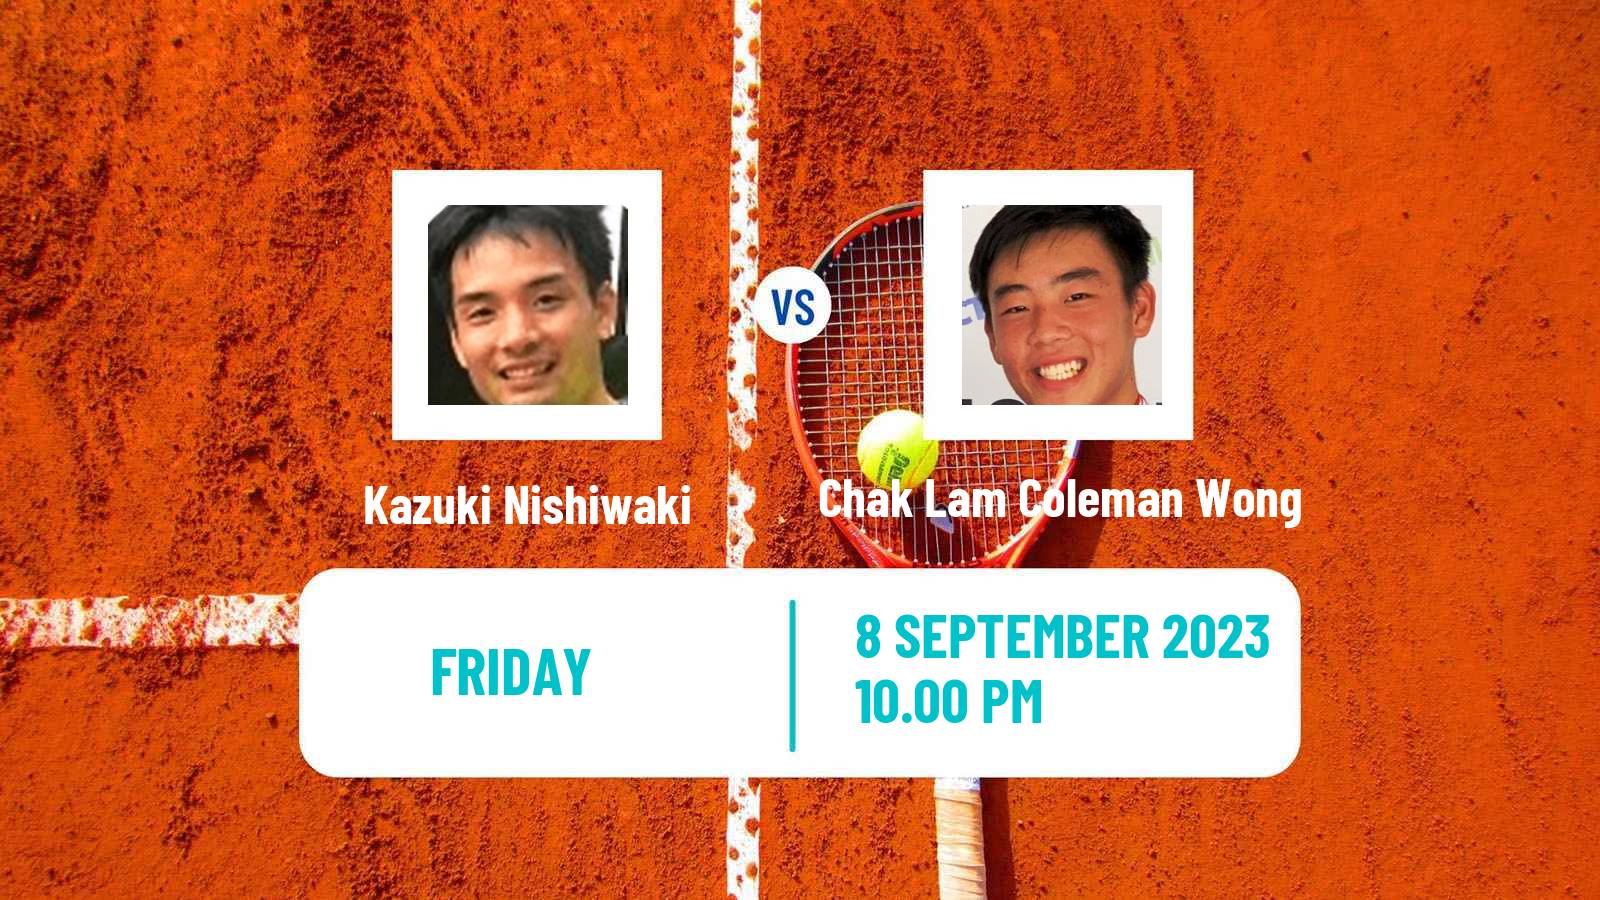 Tennis ITF M25 Hong Kong 2 Men Kazuki Nishiwaki - Chak Lam Coleman Wong